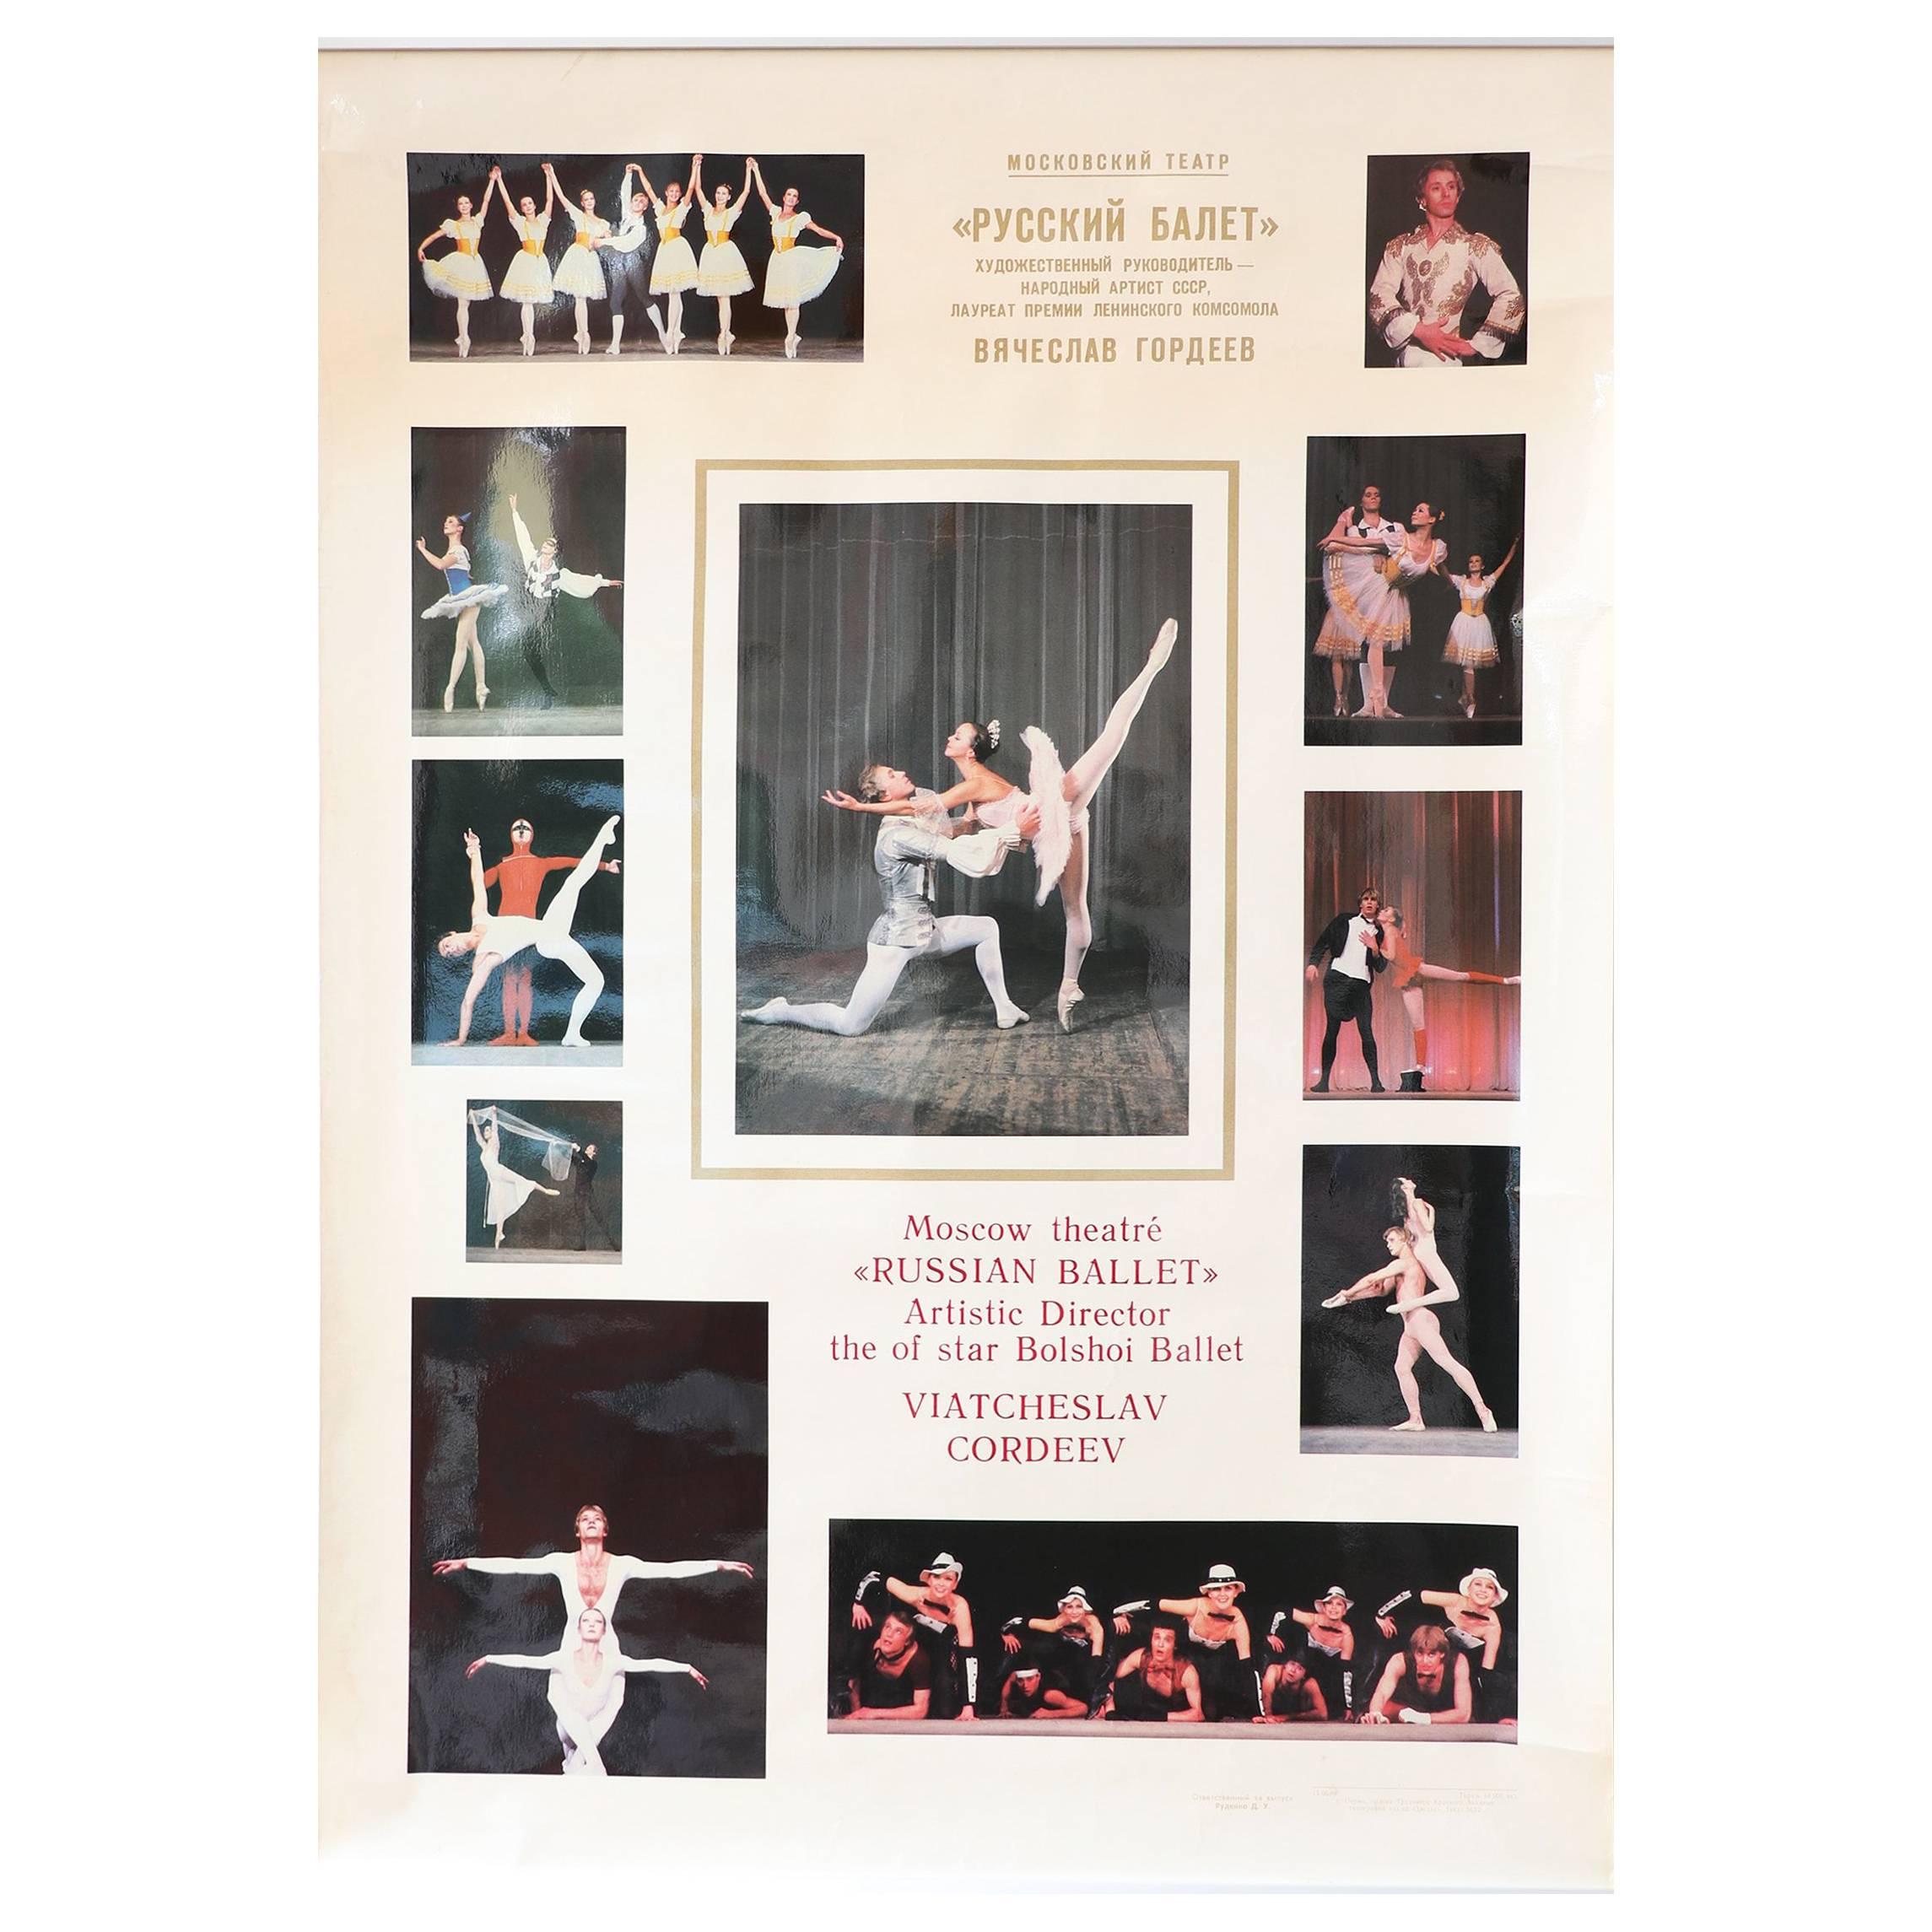 Vintage Russian Ballet High Glossy Soviet-Era Poster, 1980s Bolshoi / Gordeev For Sale